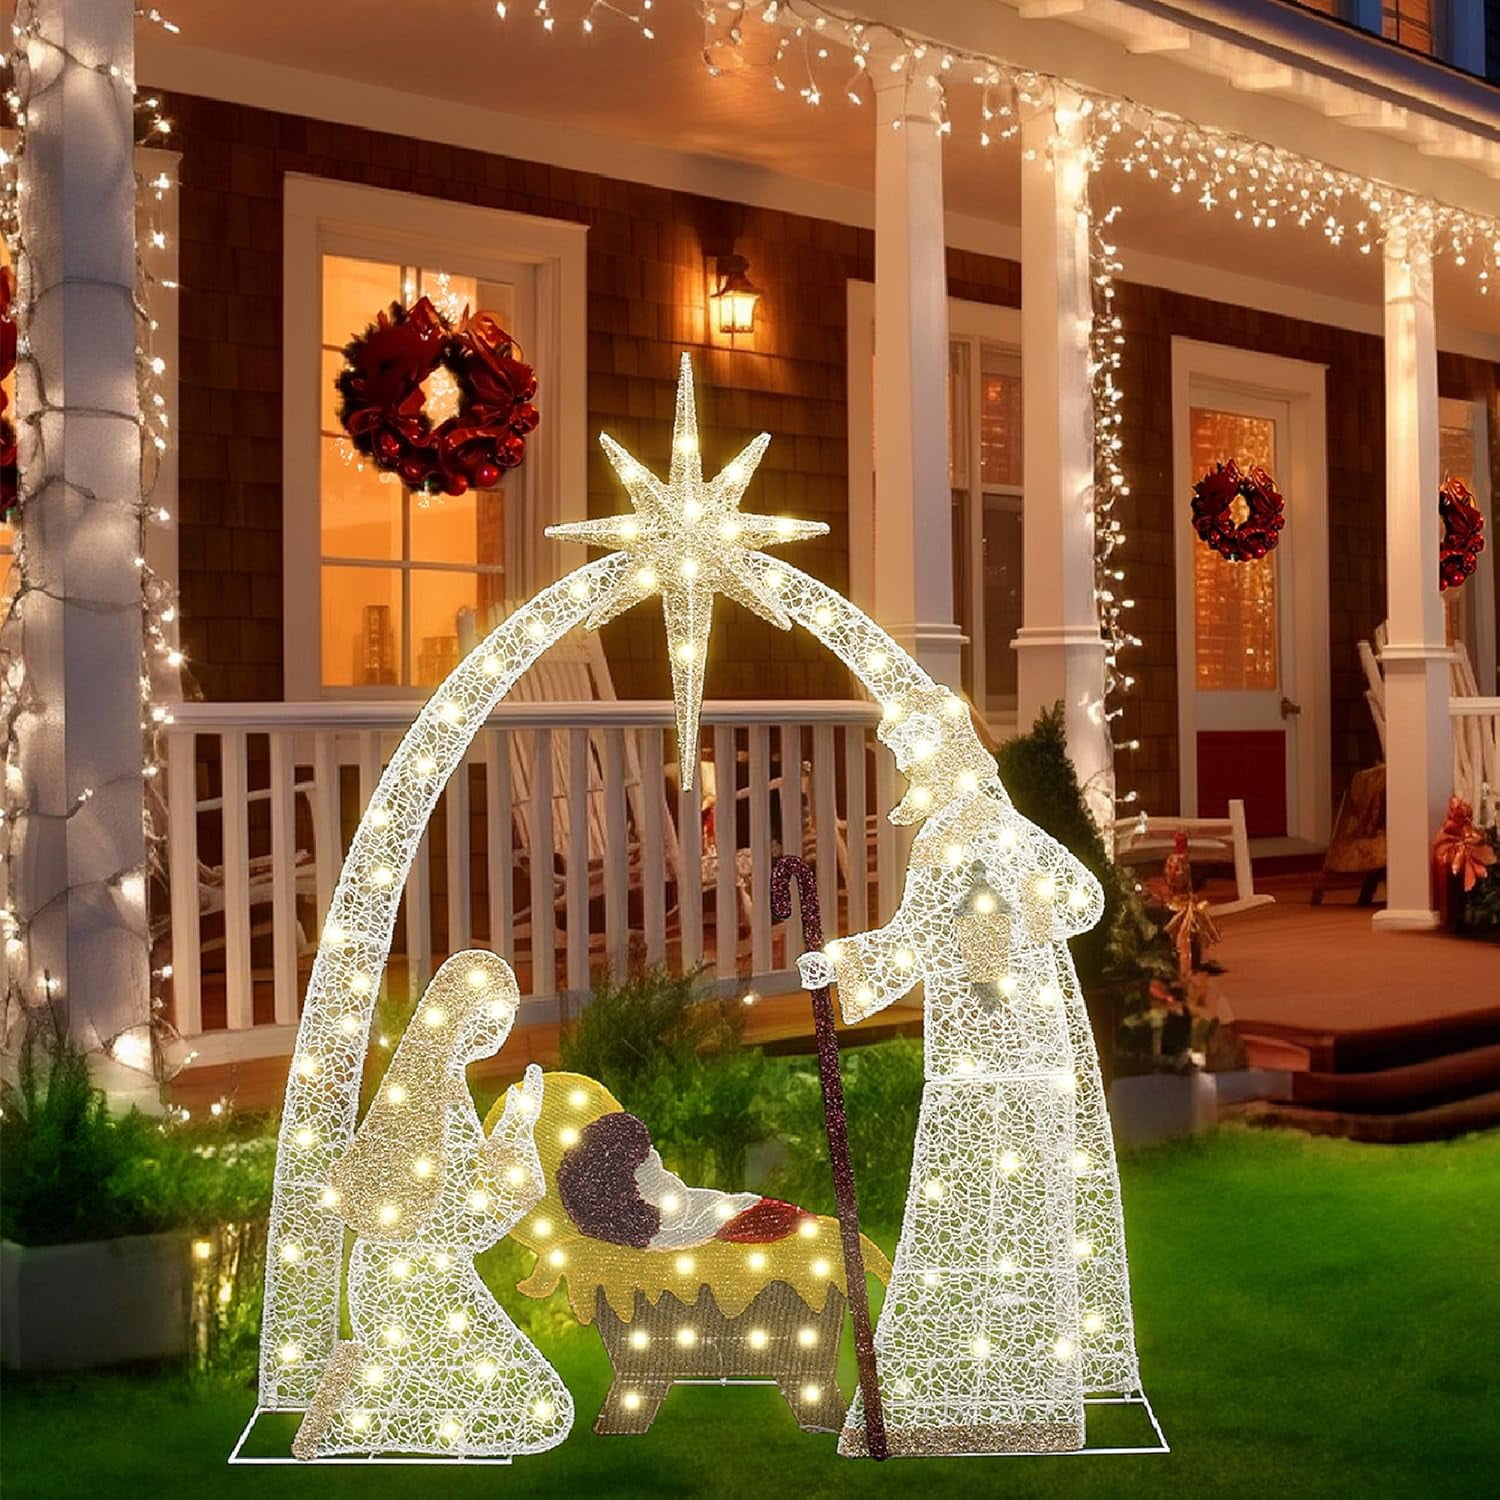 Recaceik Lighted Outdoor Nativity Scene for Christmas Decor, 3.8ft ...